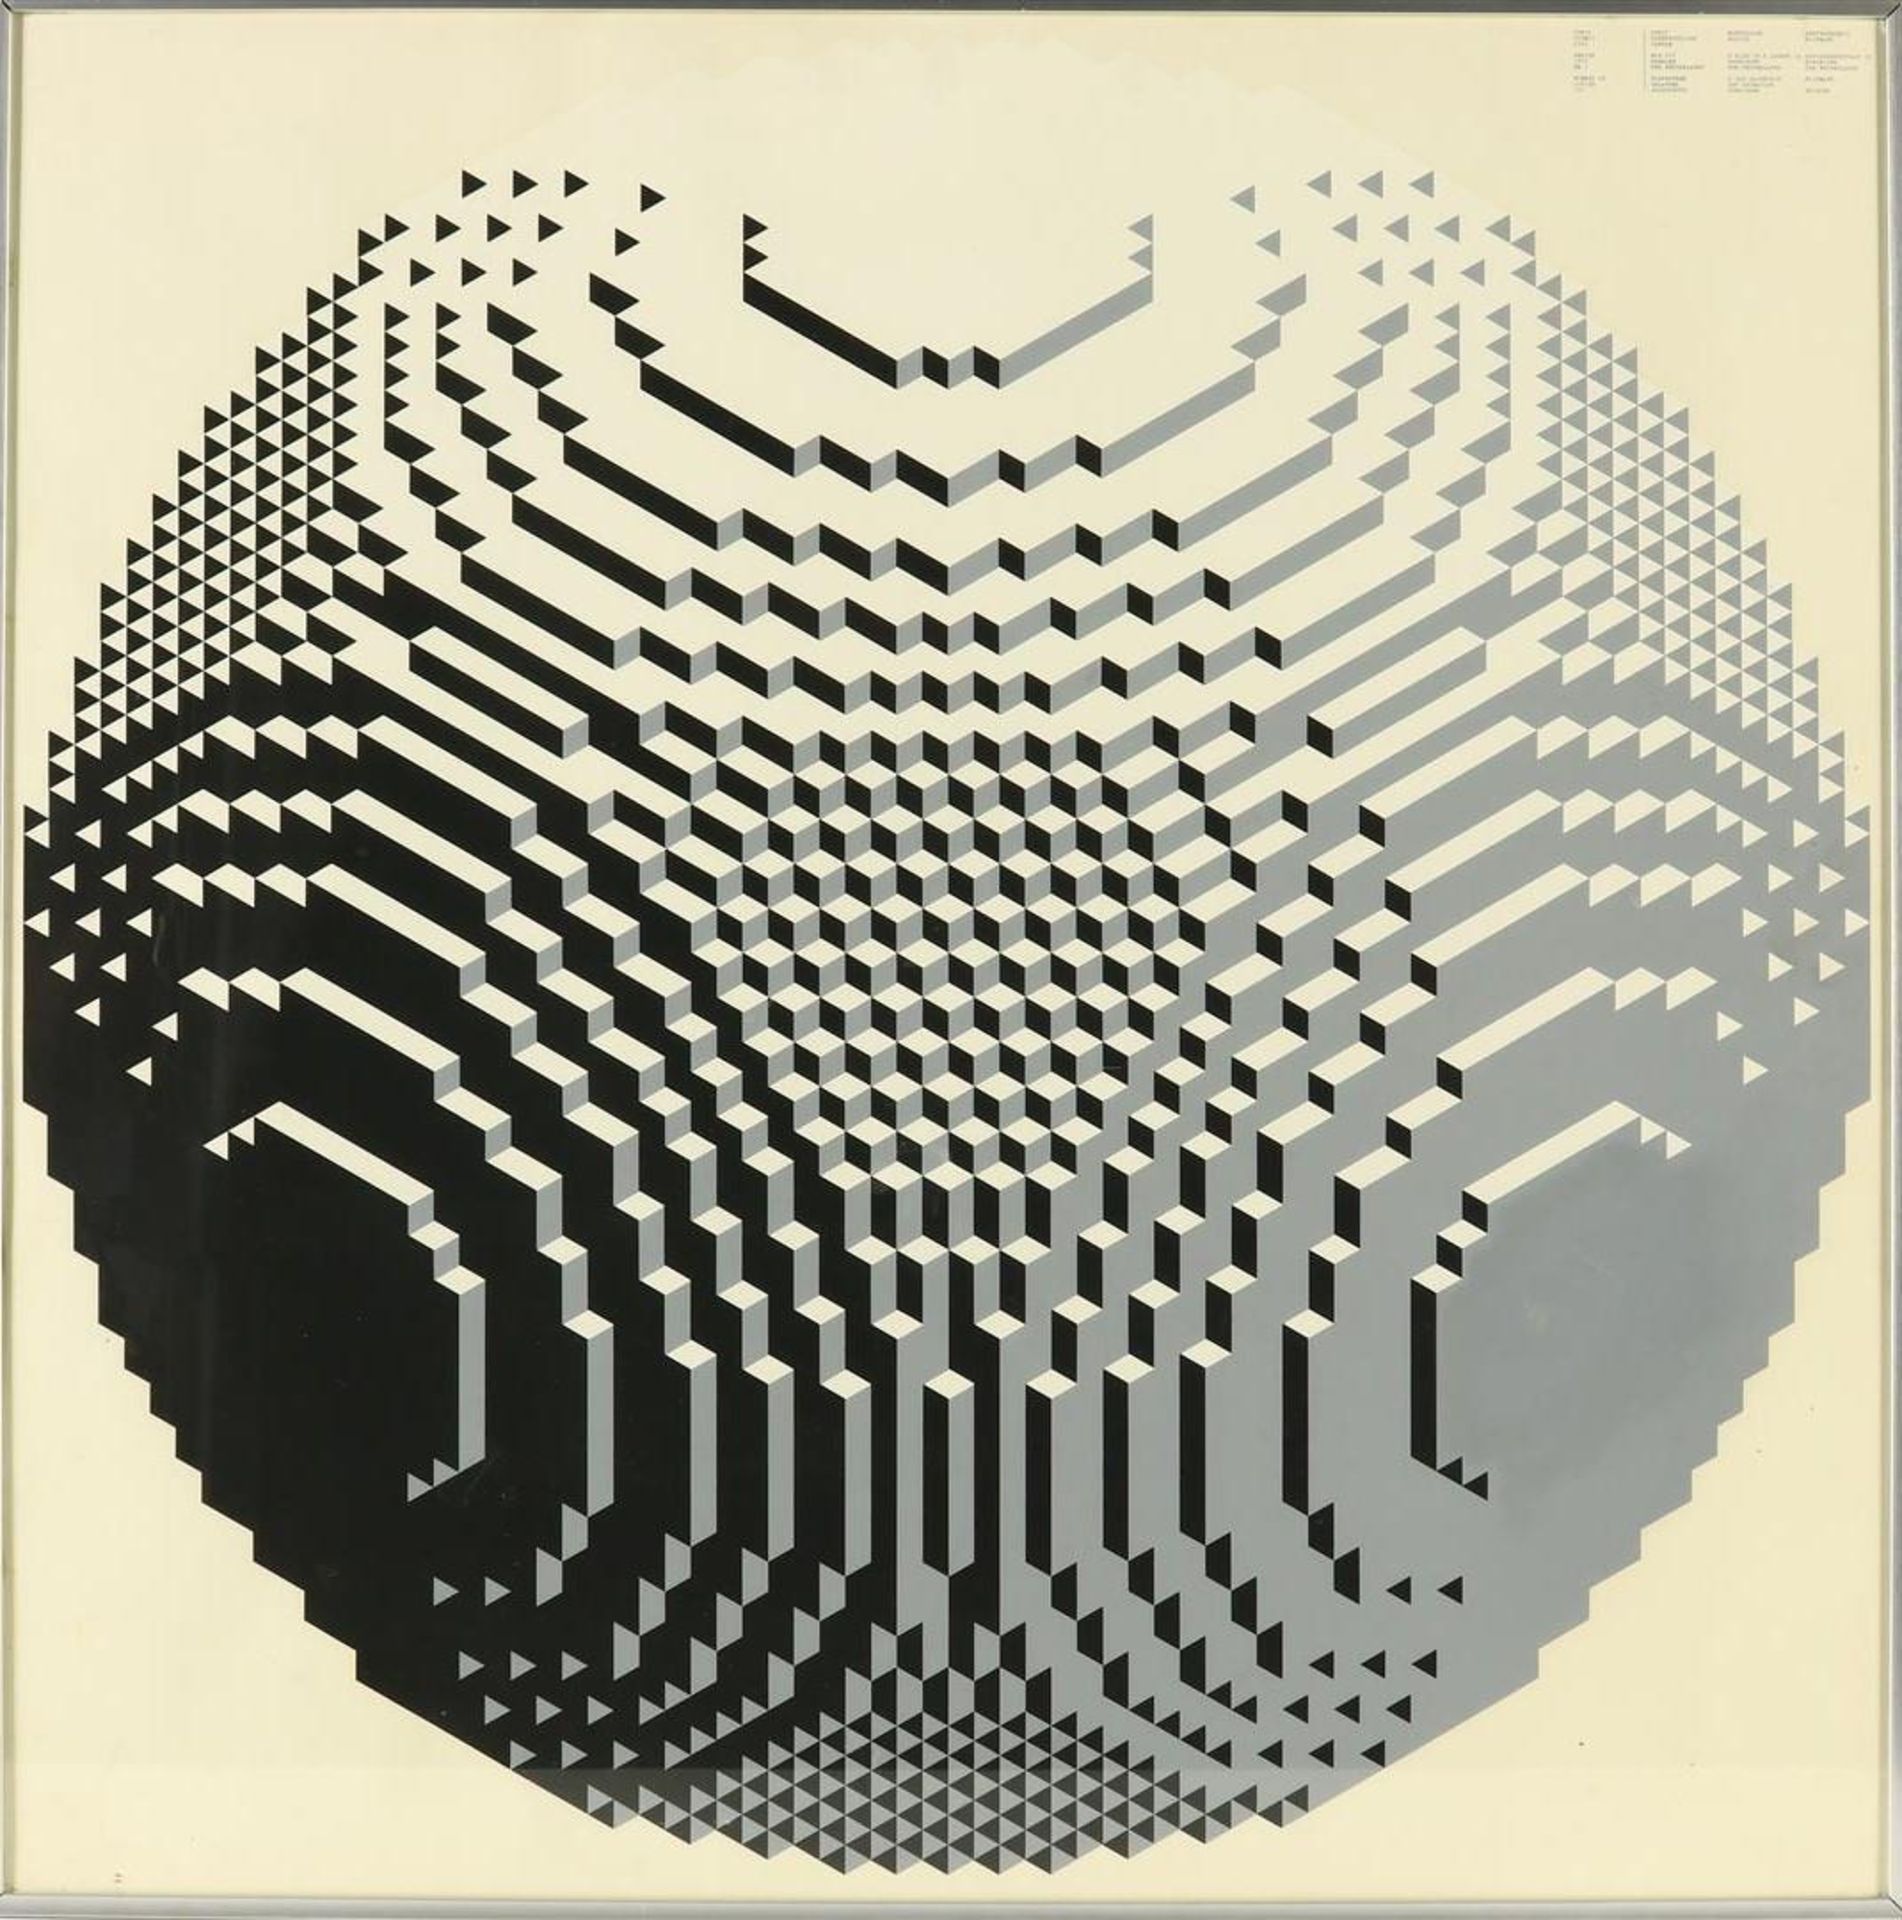 Slothouber, Jan& Graatsma, Willem, 'Cubic Cosmic City', series 1972 no. 1, edition 200, screen print